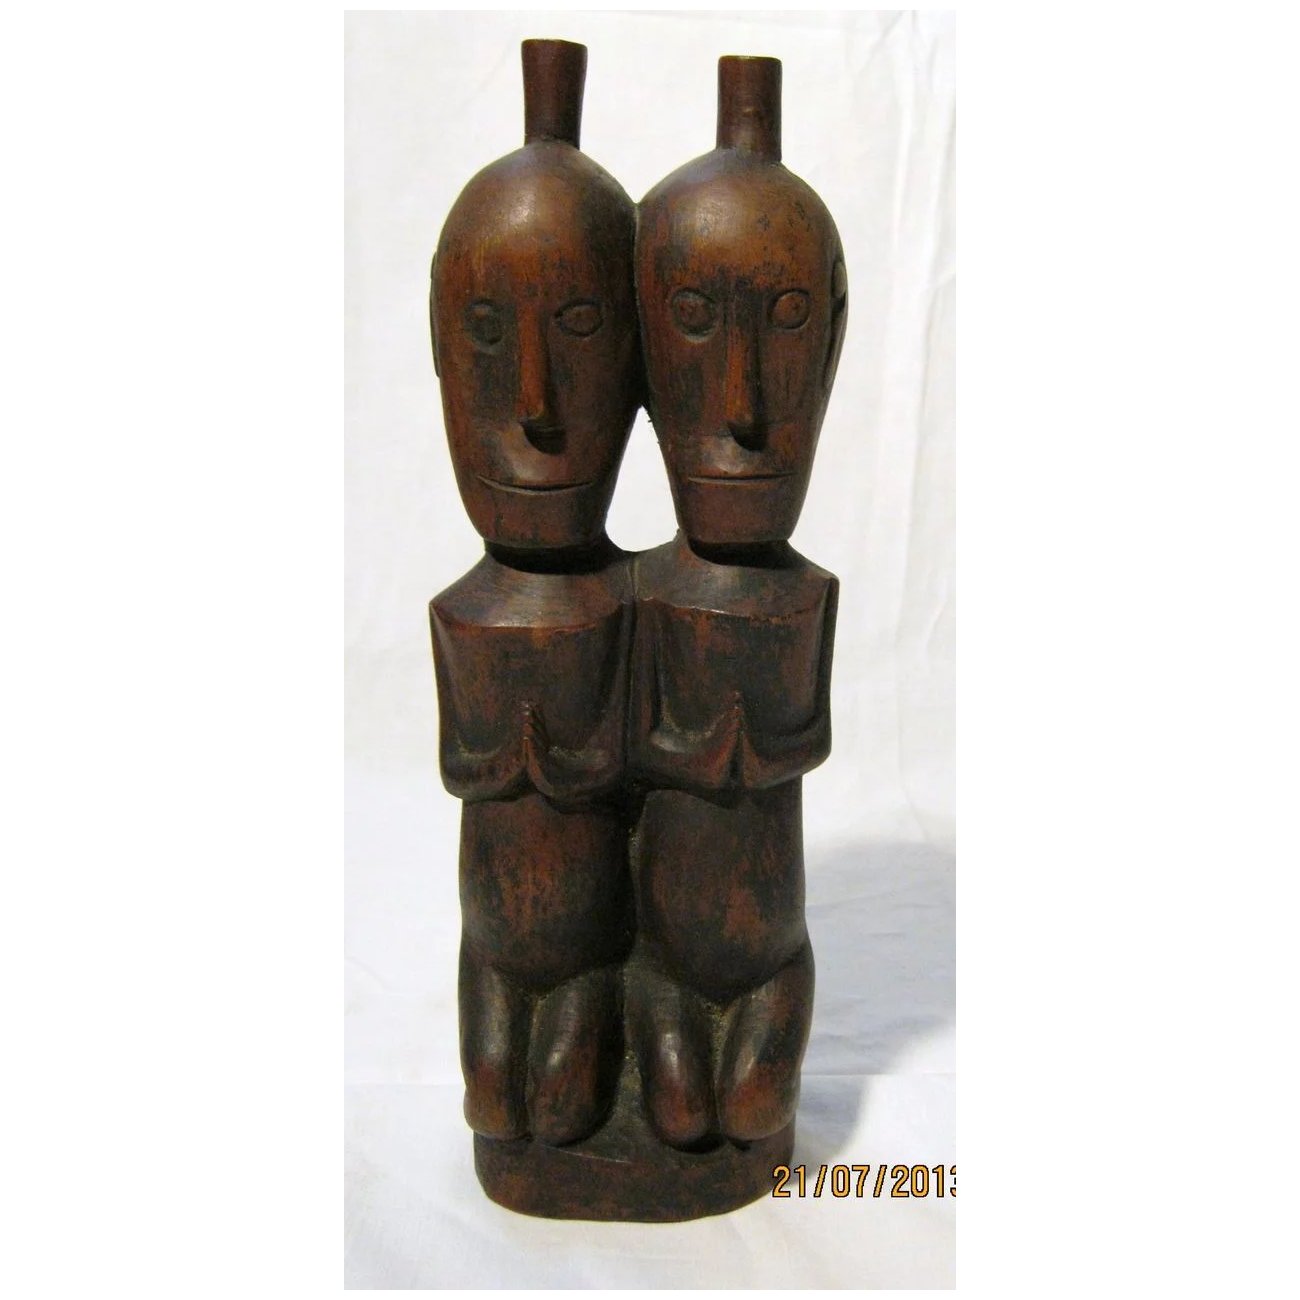 DAYAK Figurine - Borneo - Indonesia - Circa 1900- 1920